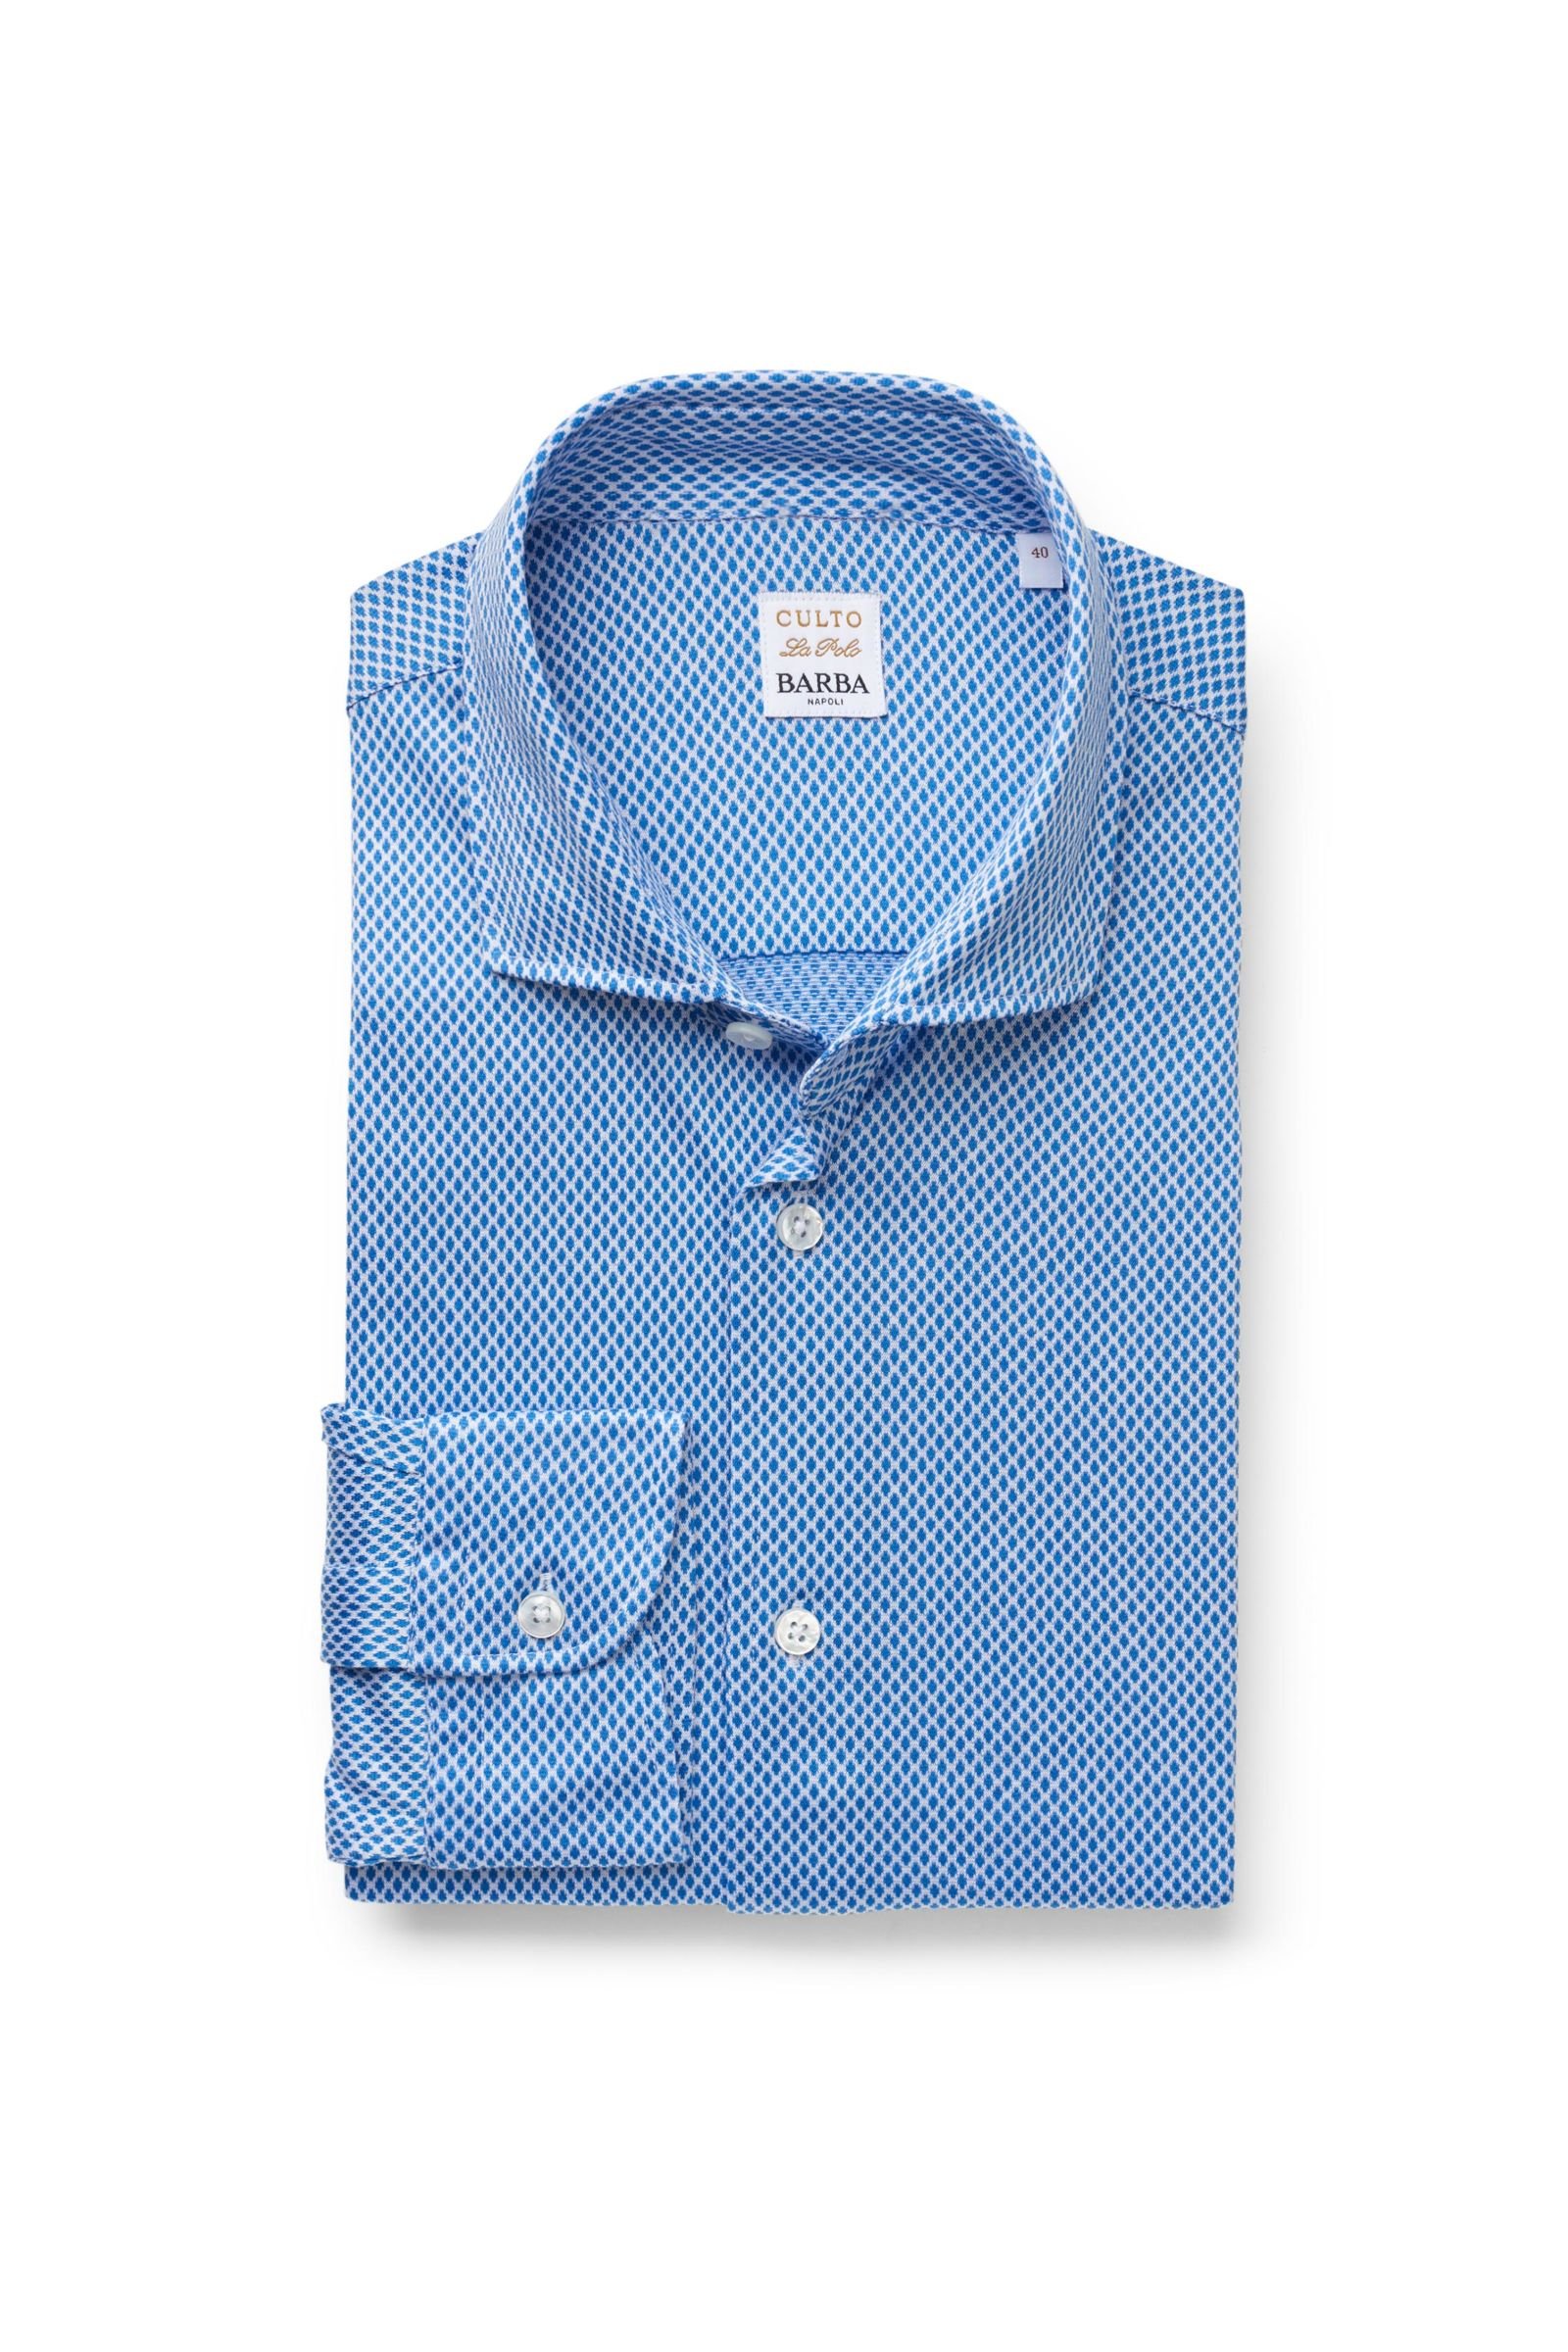 Jersey shirt slim collar blue patterned